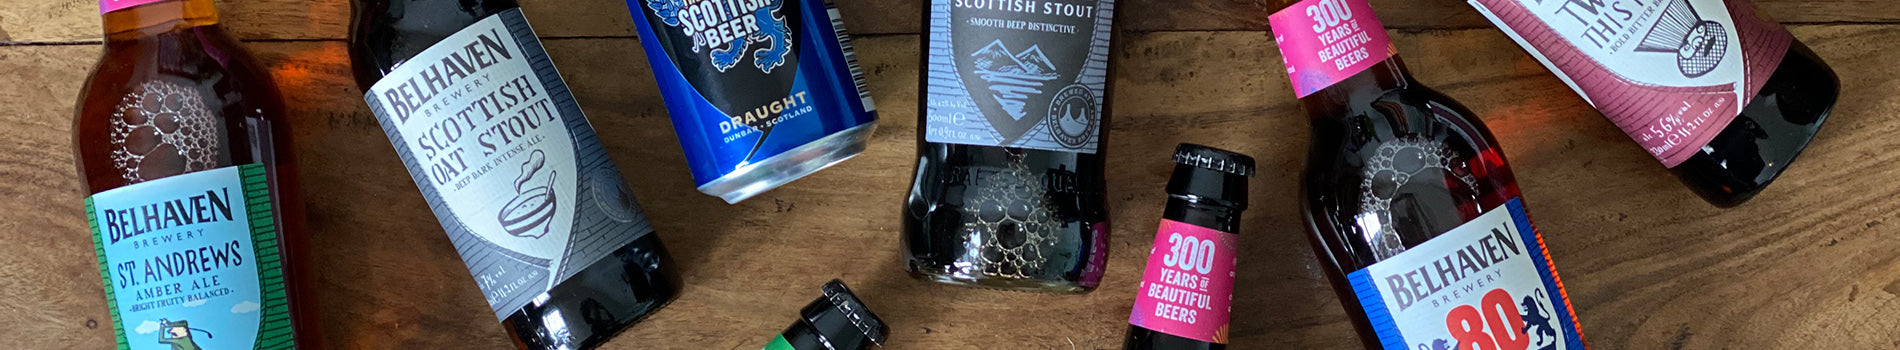 Scottish Ale